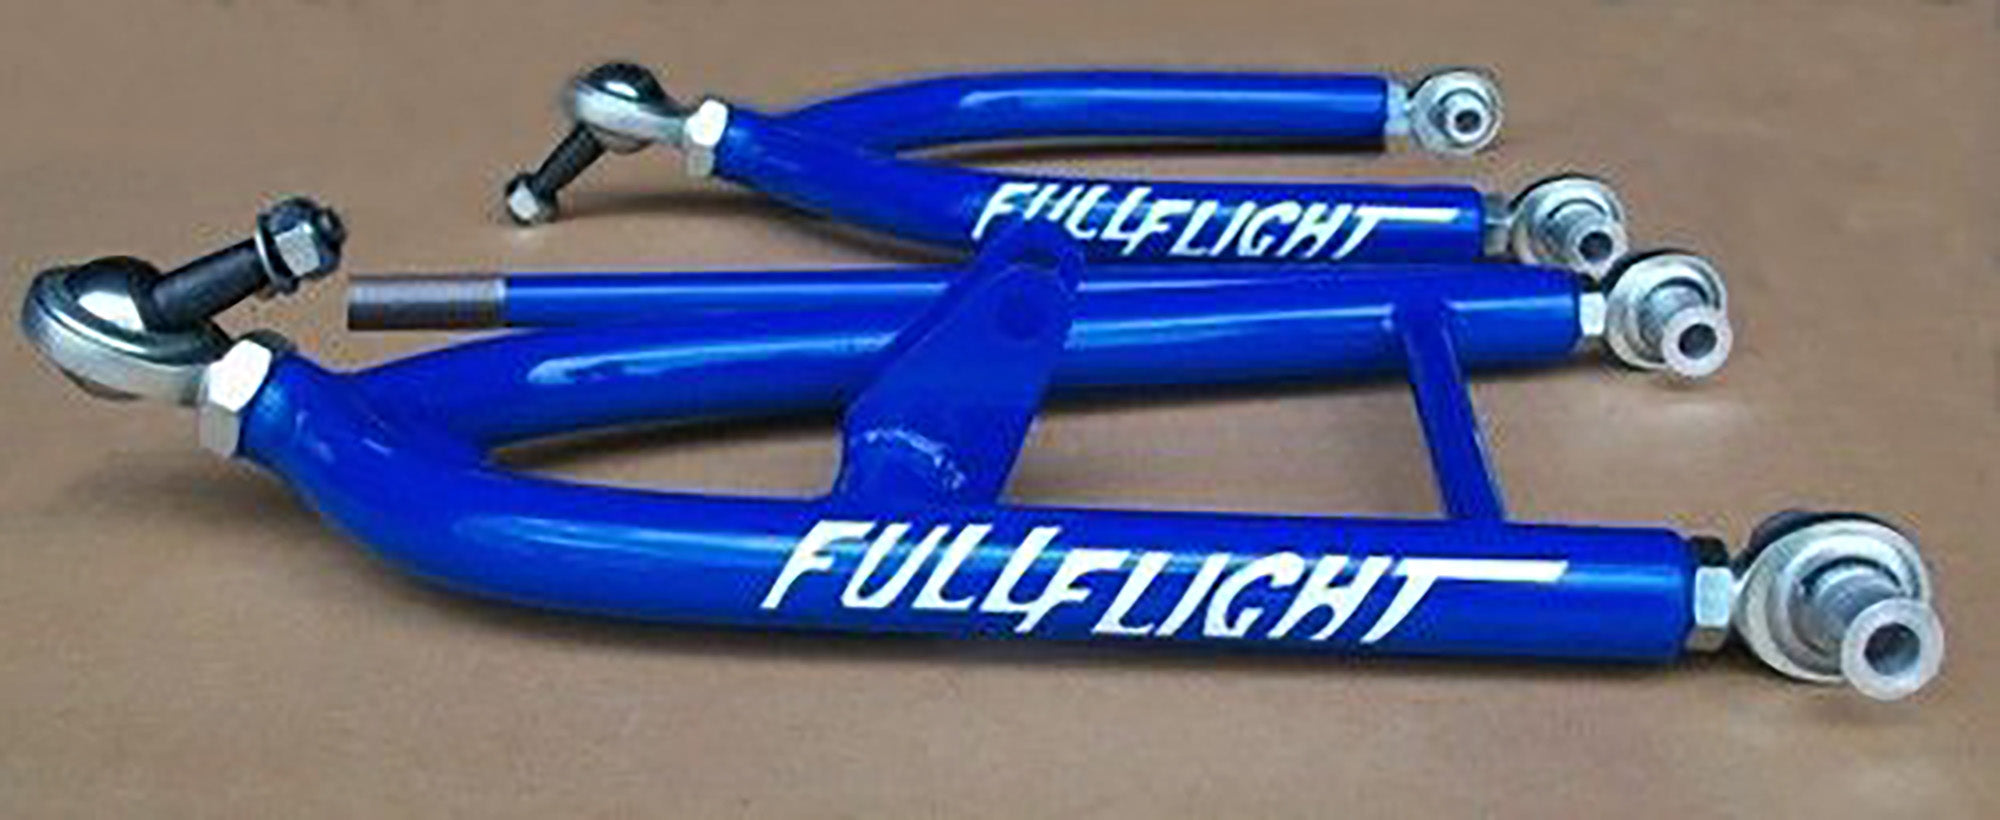 KAWASAKI-Fullflight Racing Legacy Series Extended ATV A-arms - FullFlight Racing  | FULLFLIGHT RACING STANDARD EXTENDED ATV A-ARMS | FullFlight Racing | FullFlight Racing 